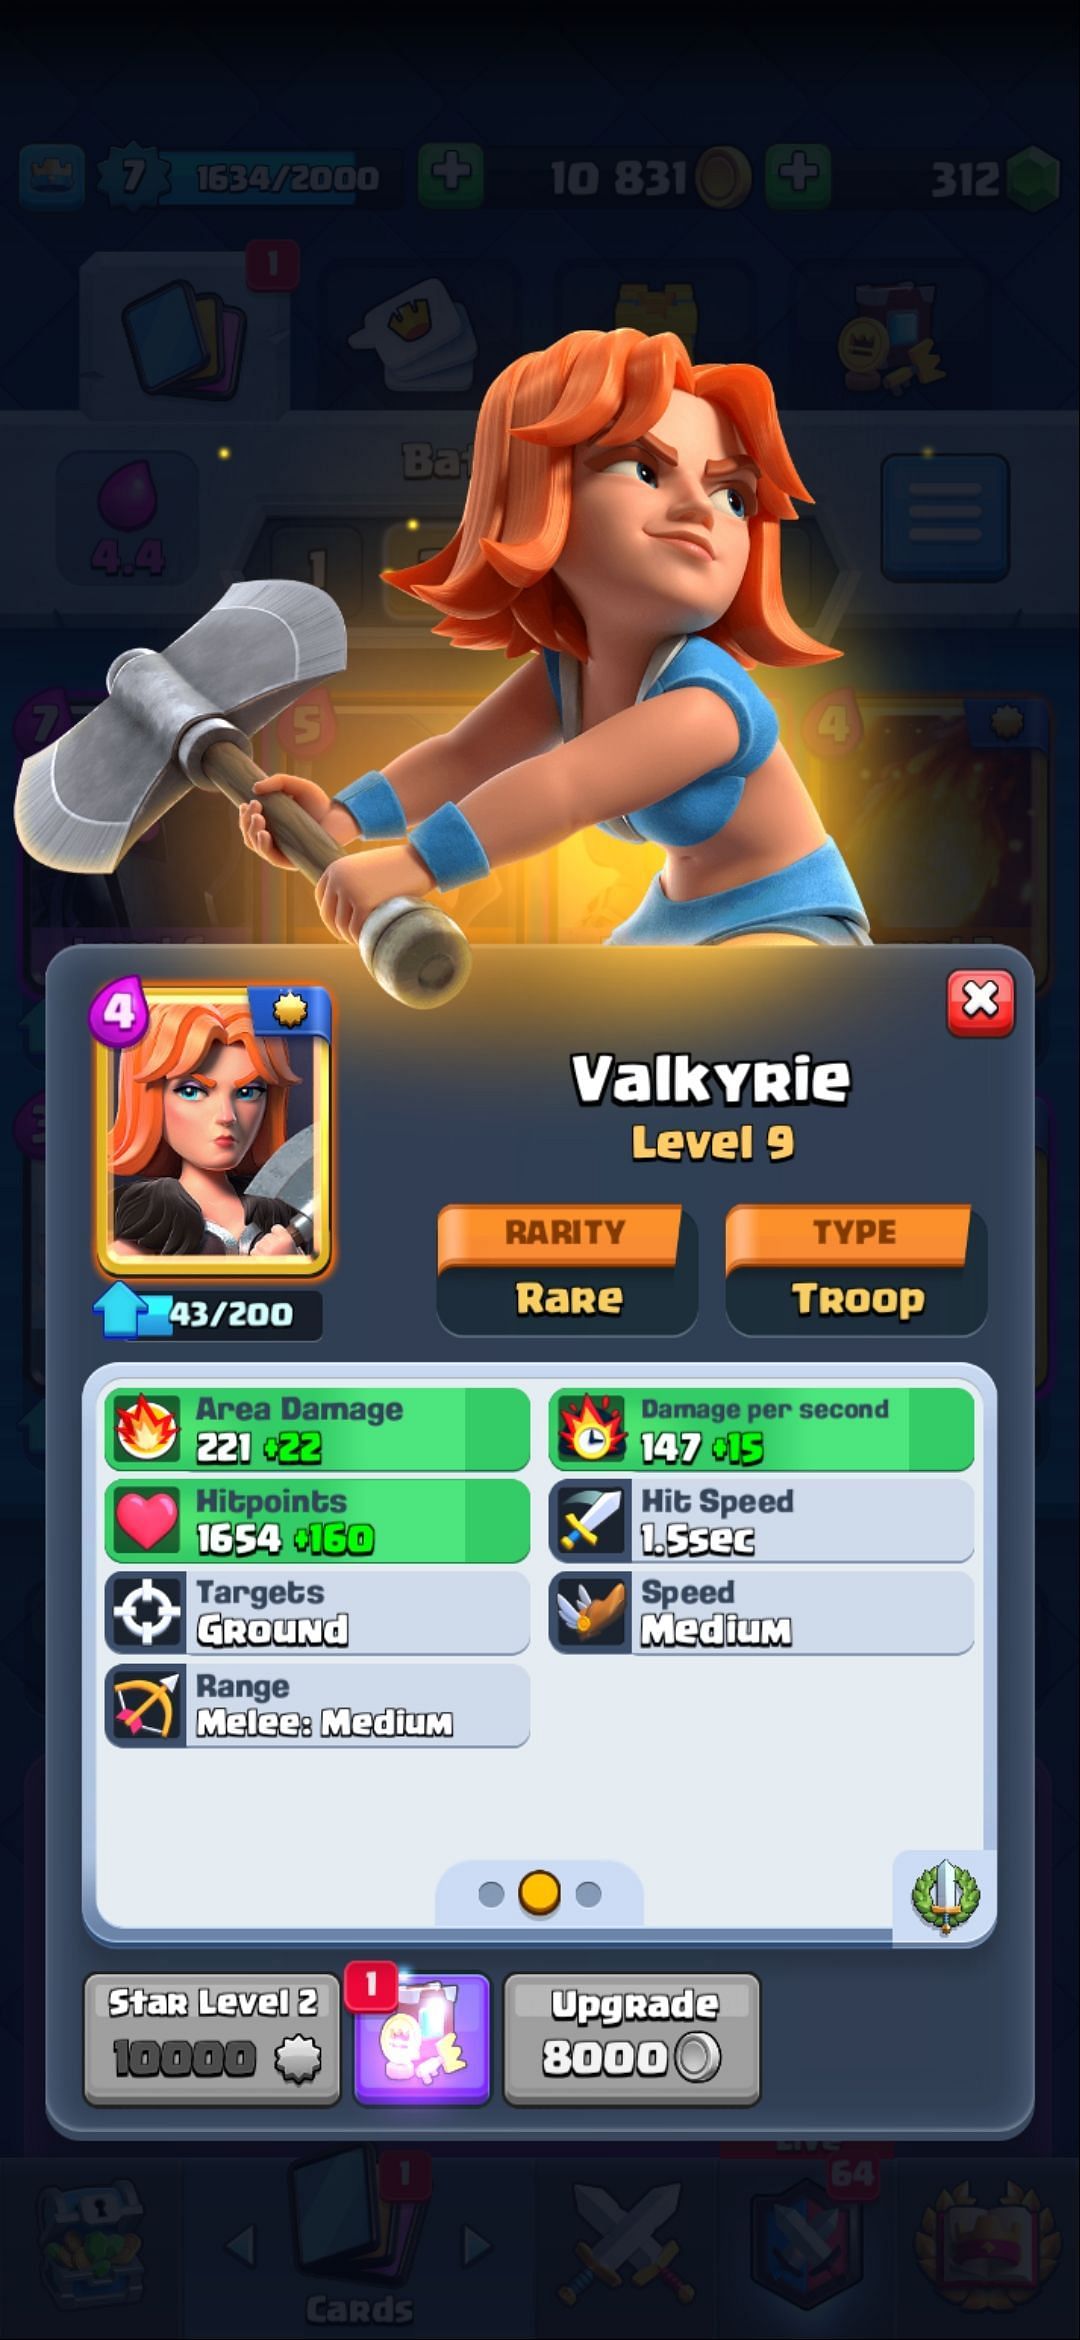 The Valkyrie card in Clash Royale (Image via Sportskeeda)